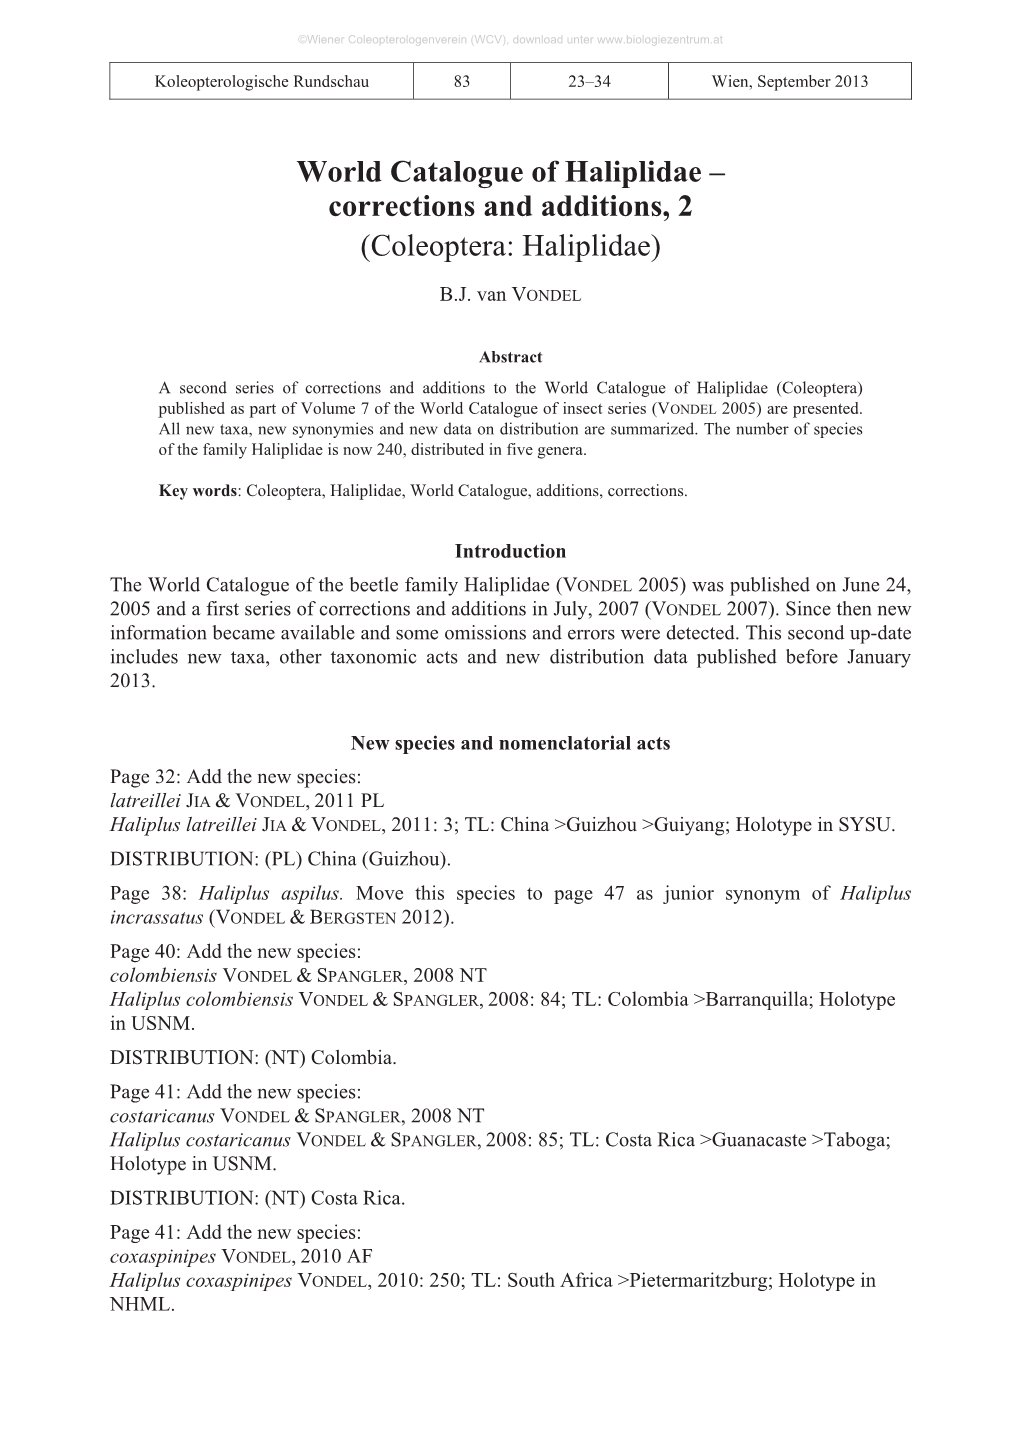 World Catalogue of Haliplidae – Corrections and Additions, 2 (HALIPLIDAE) 25